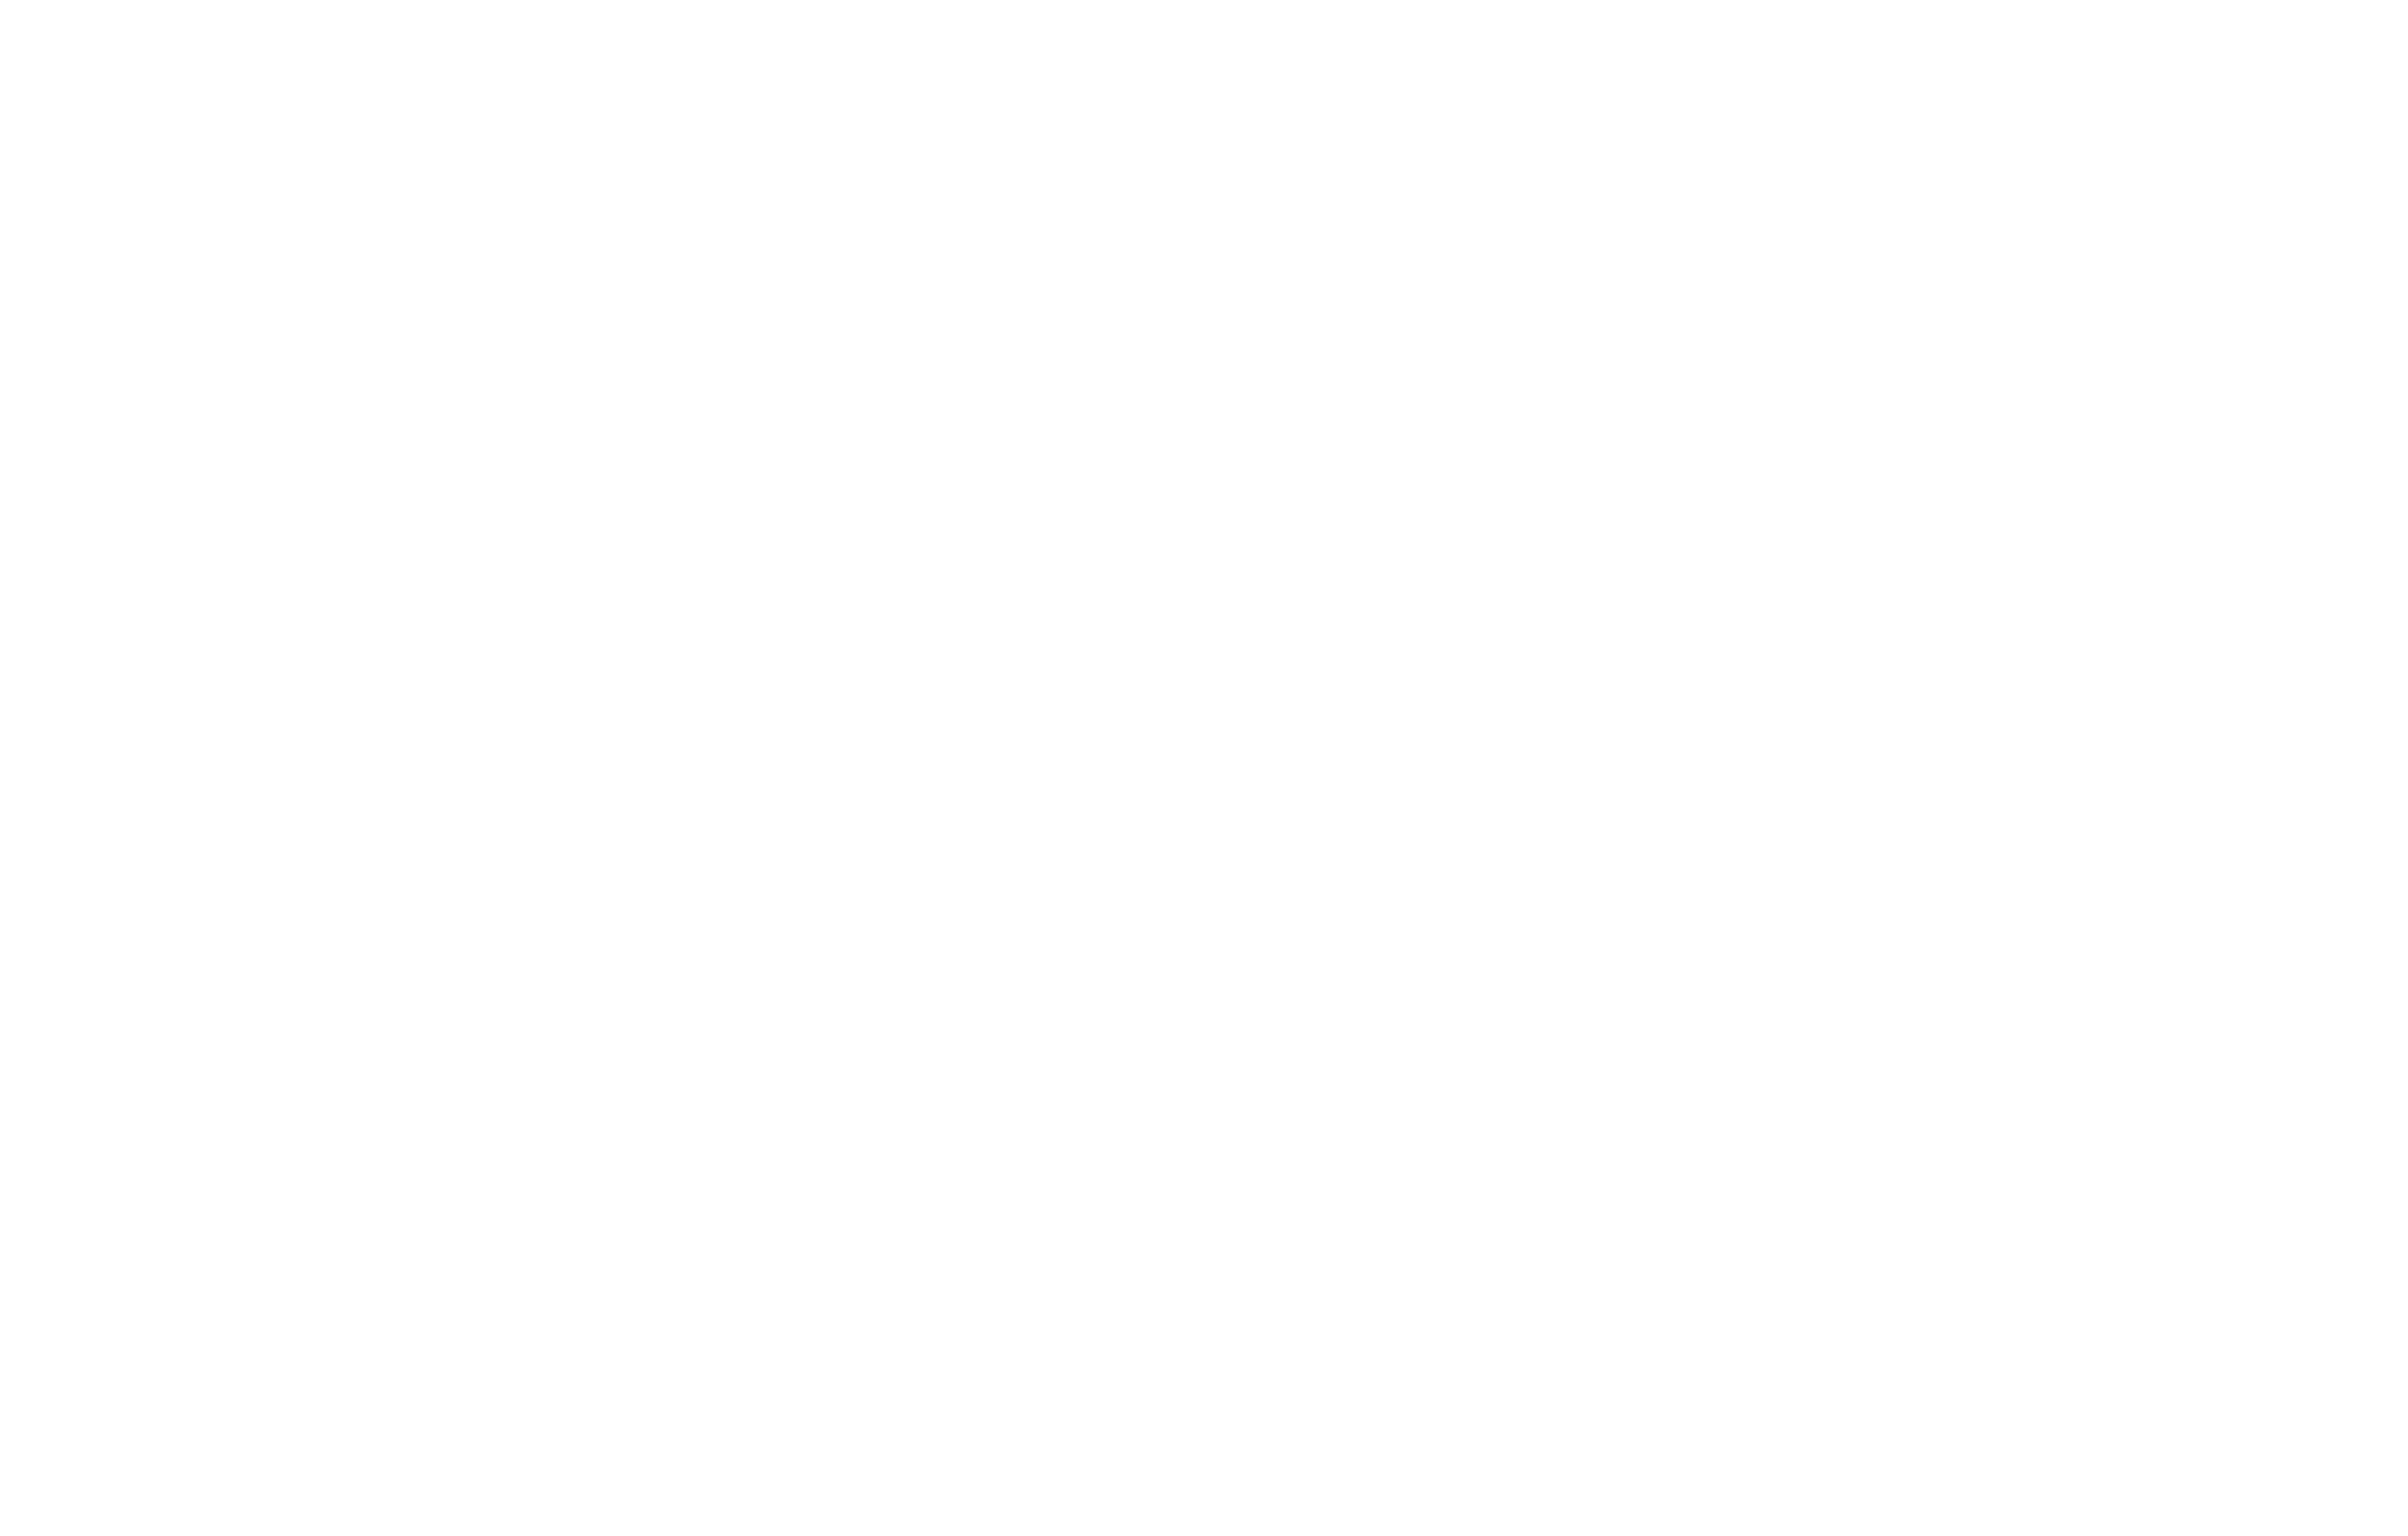 Nasiol India